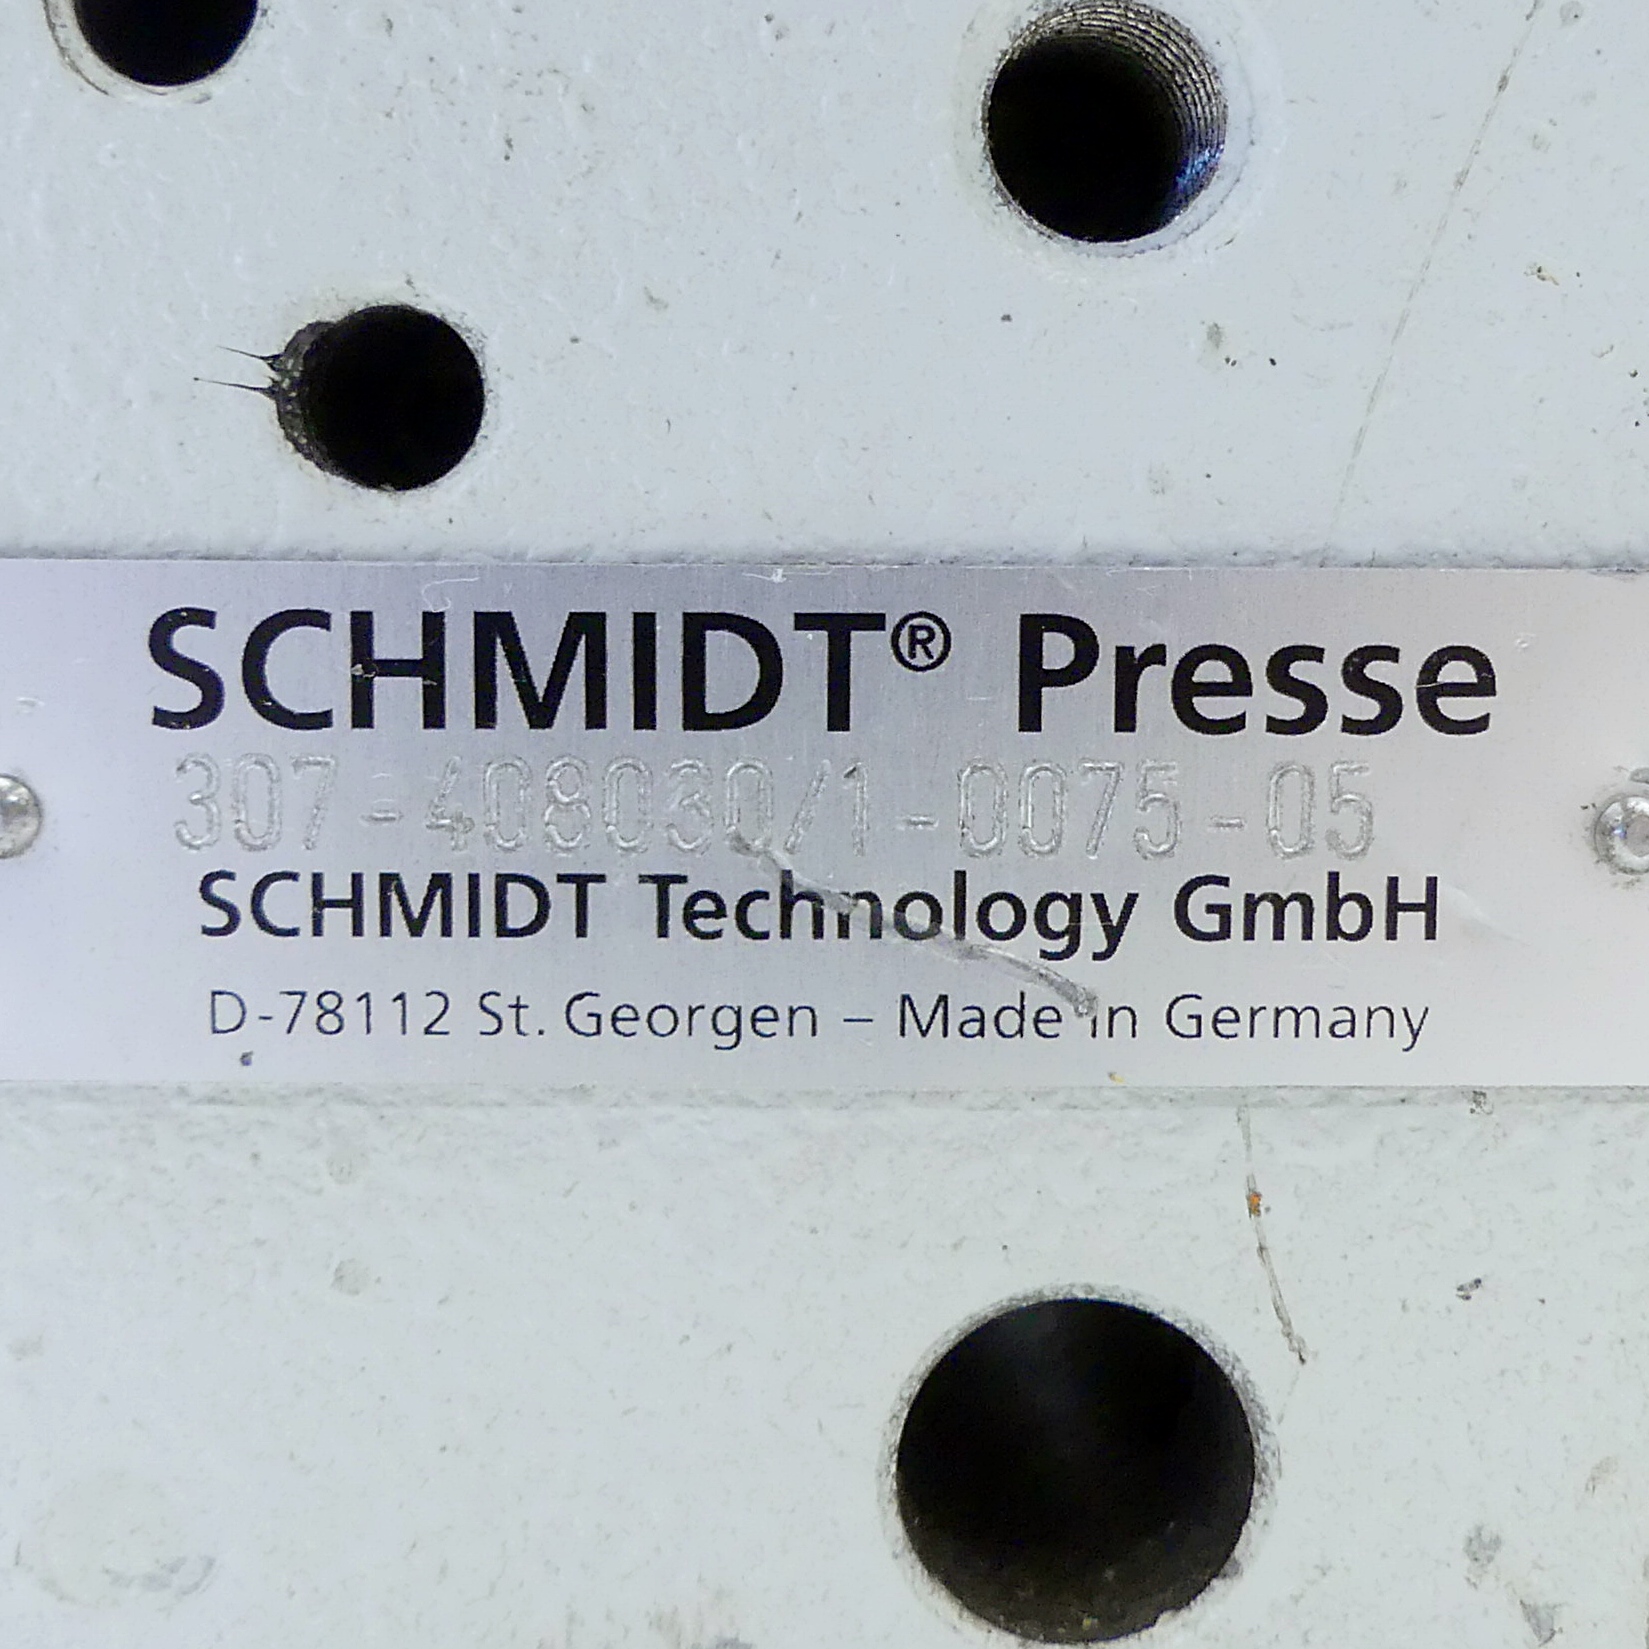 manual press 307-408030/1-0075-05 